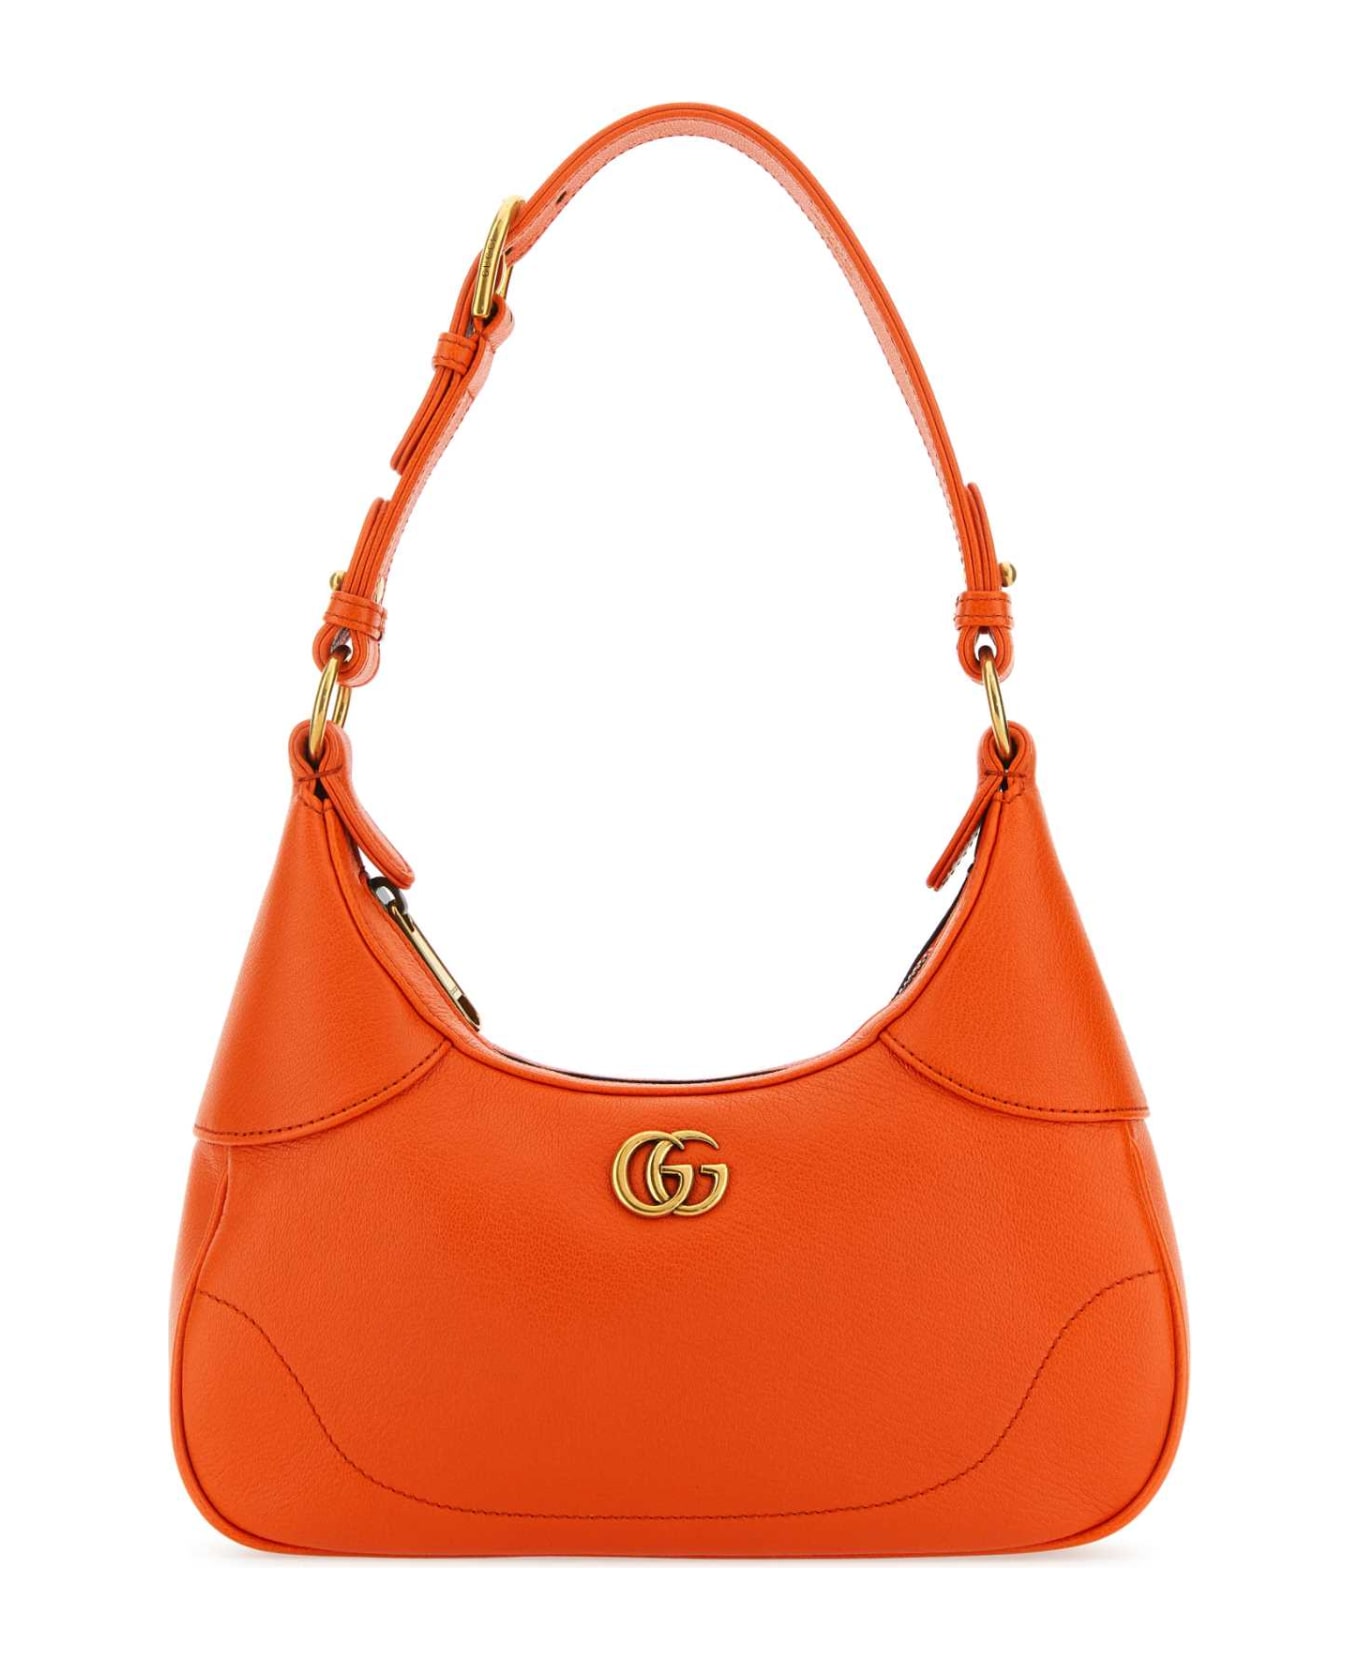 Gucci Orange Leather Small Aphrodite Handbag - DEEPORANGE